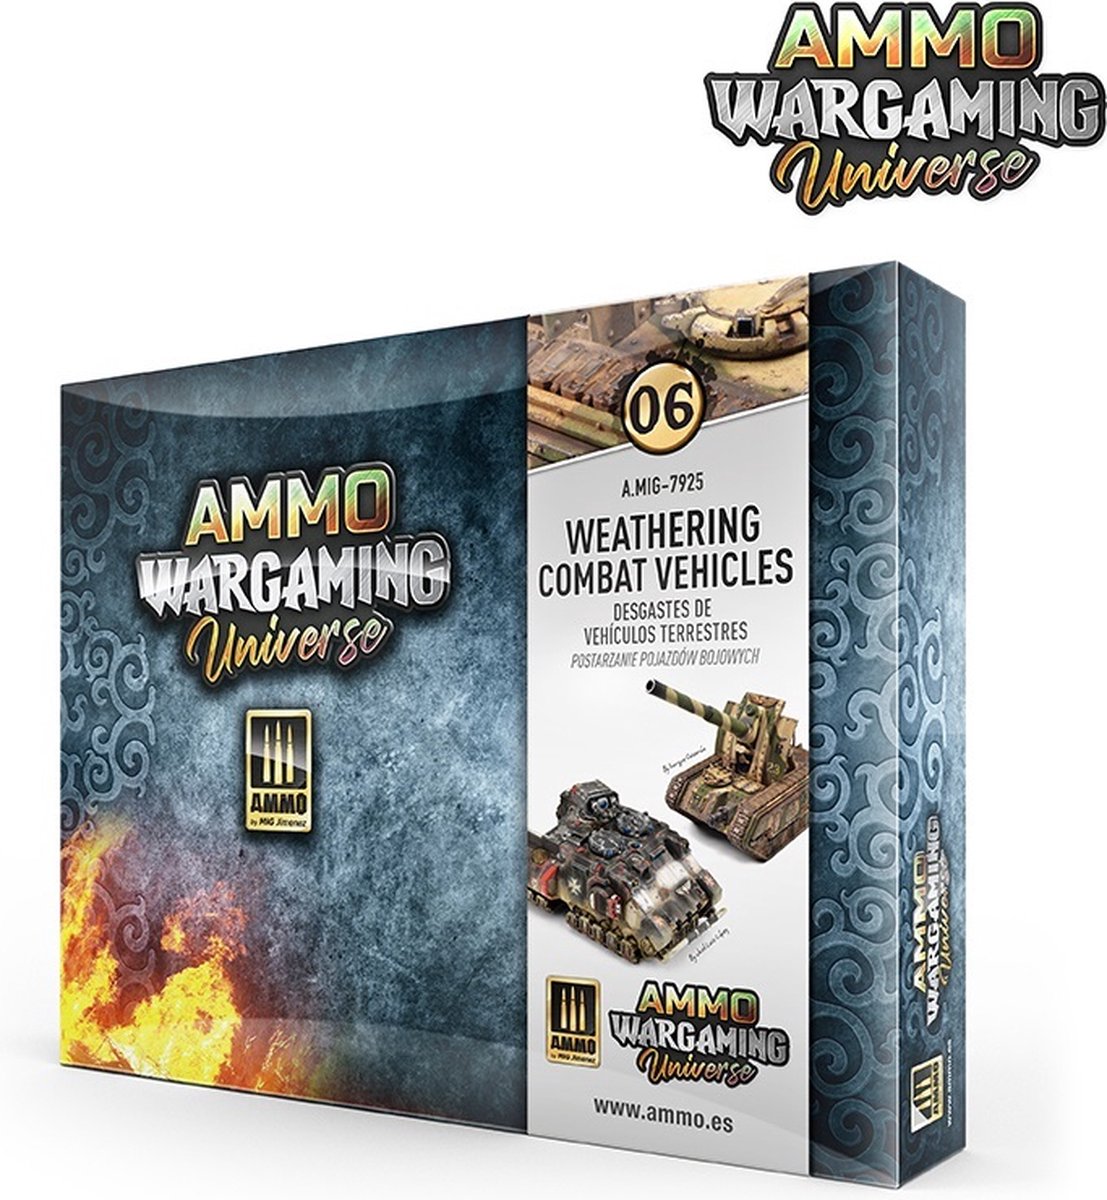 AMMO MIG 7925 Wargaming Universe 06 - Weathering Combat Vehicles Effecten set